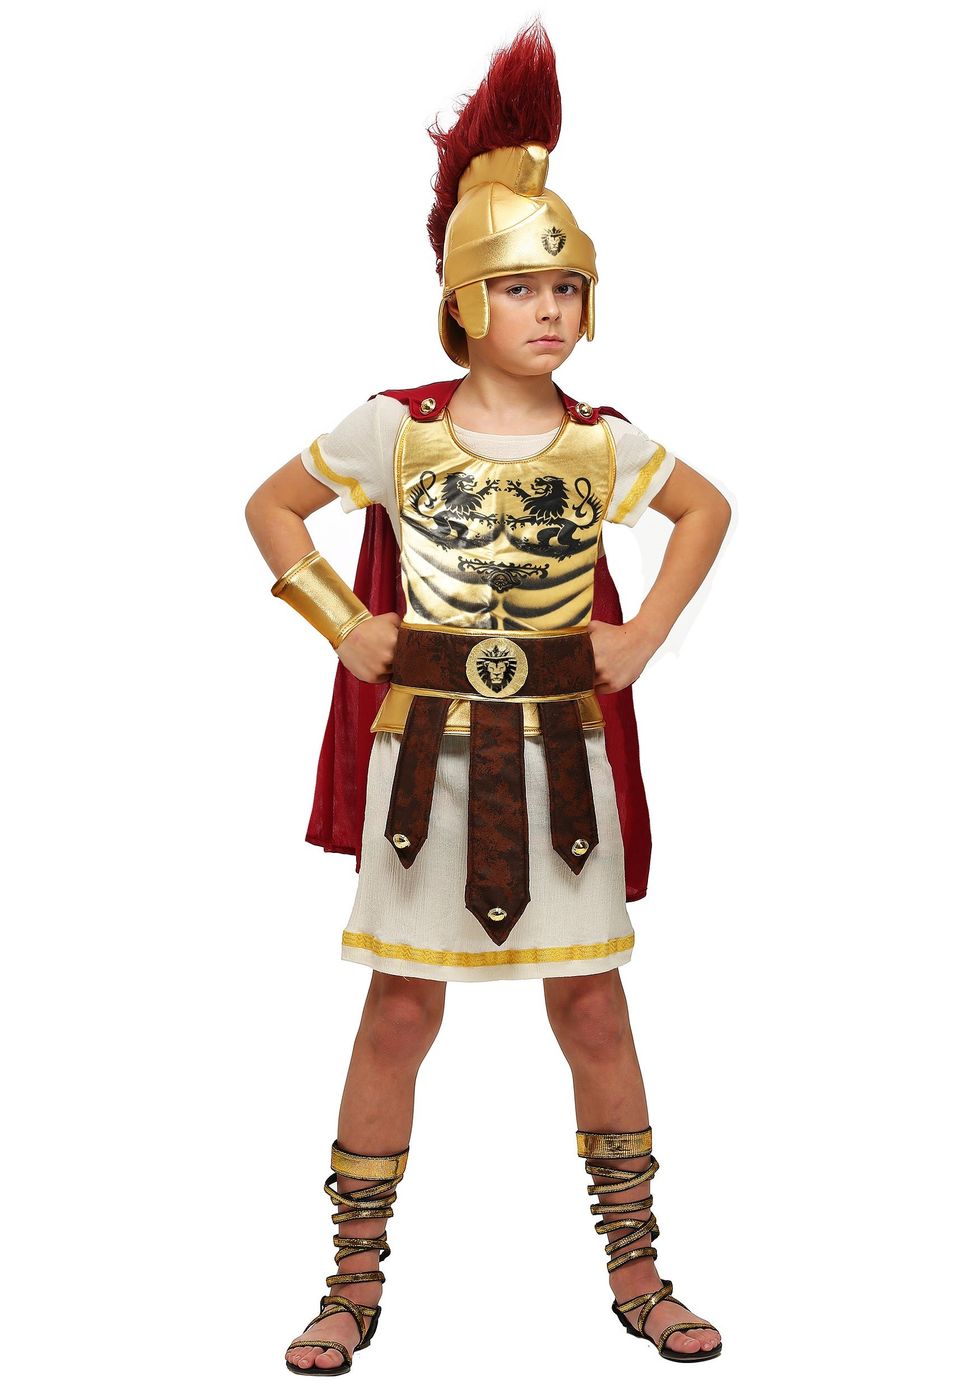 Best Roman Empire Halloween Costumes